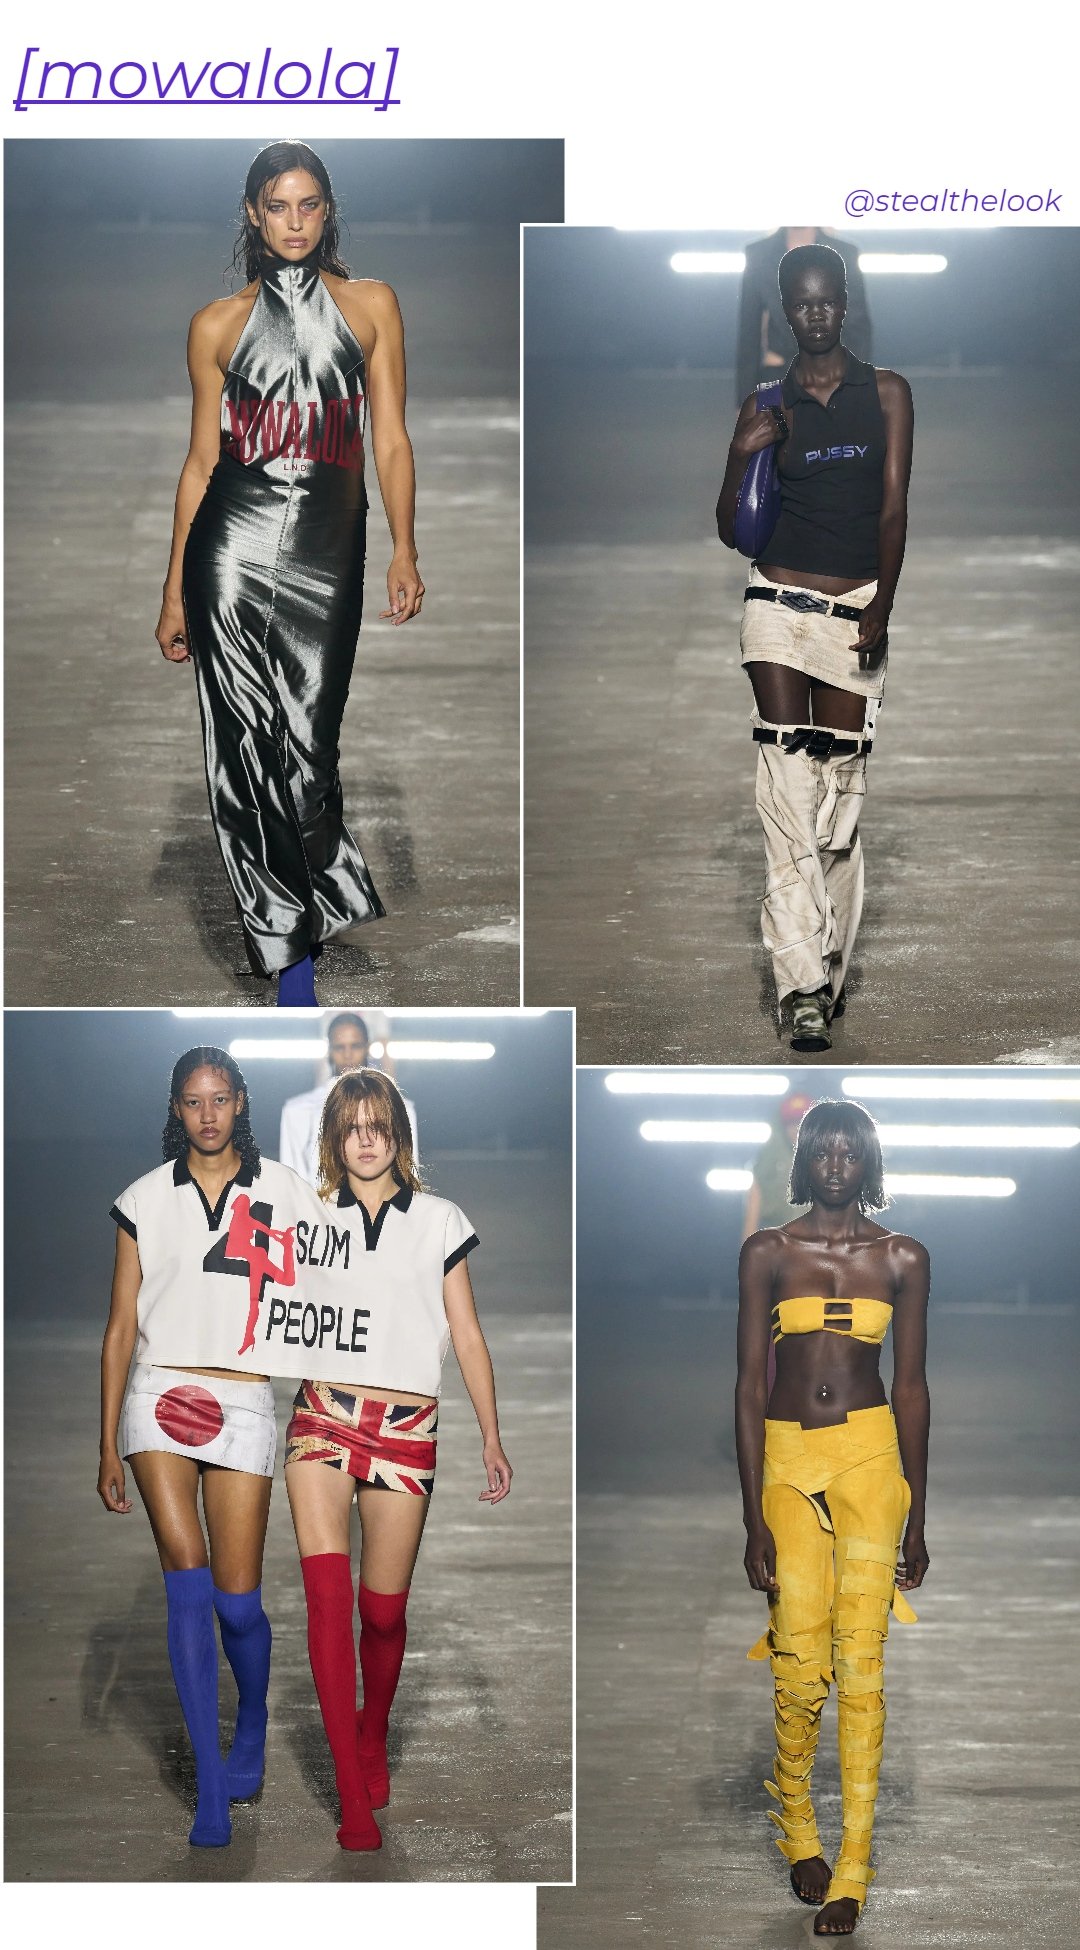 Mowalola - roupas diversas - London Fashion Week - primavera - colagem de imagens - https://stealthelook.com.br